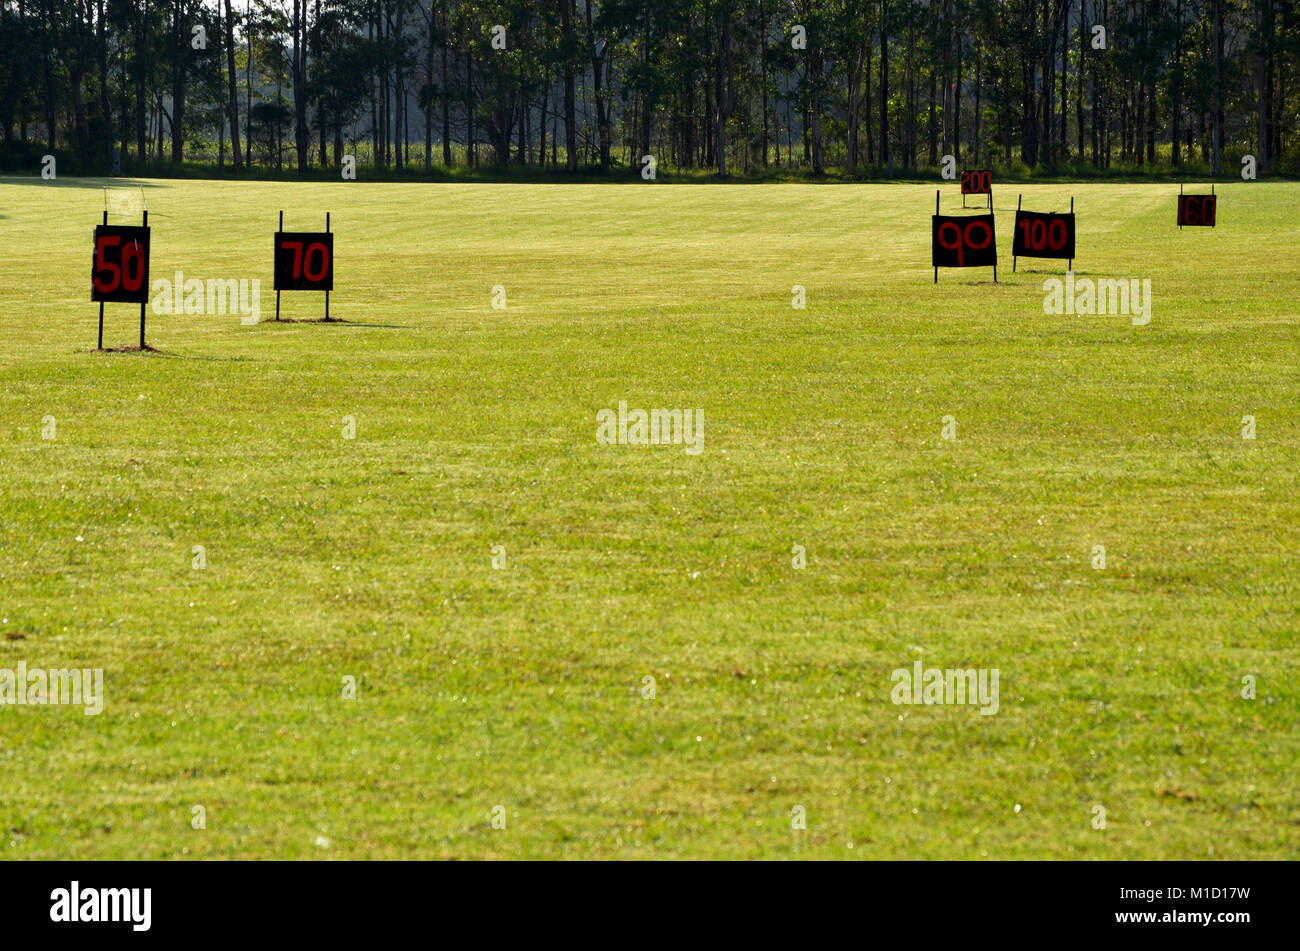 Golf driving range Stock Photo